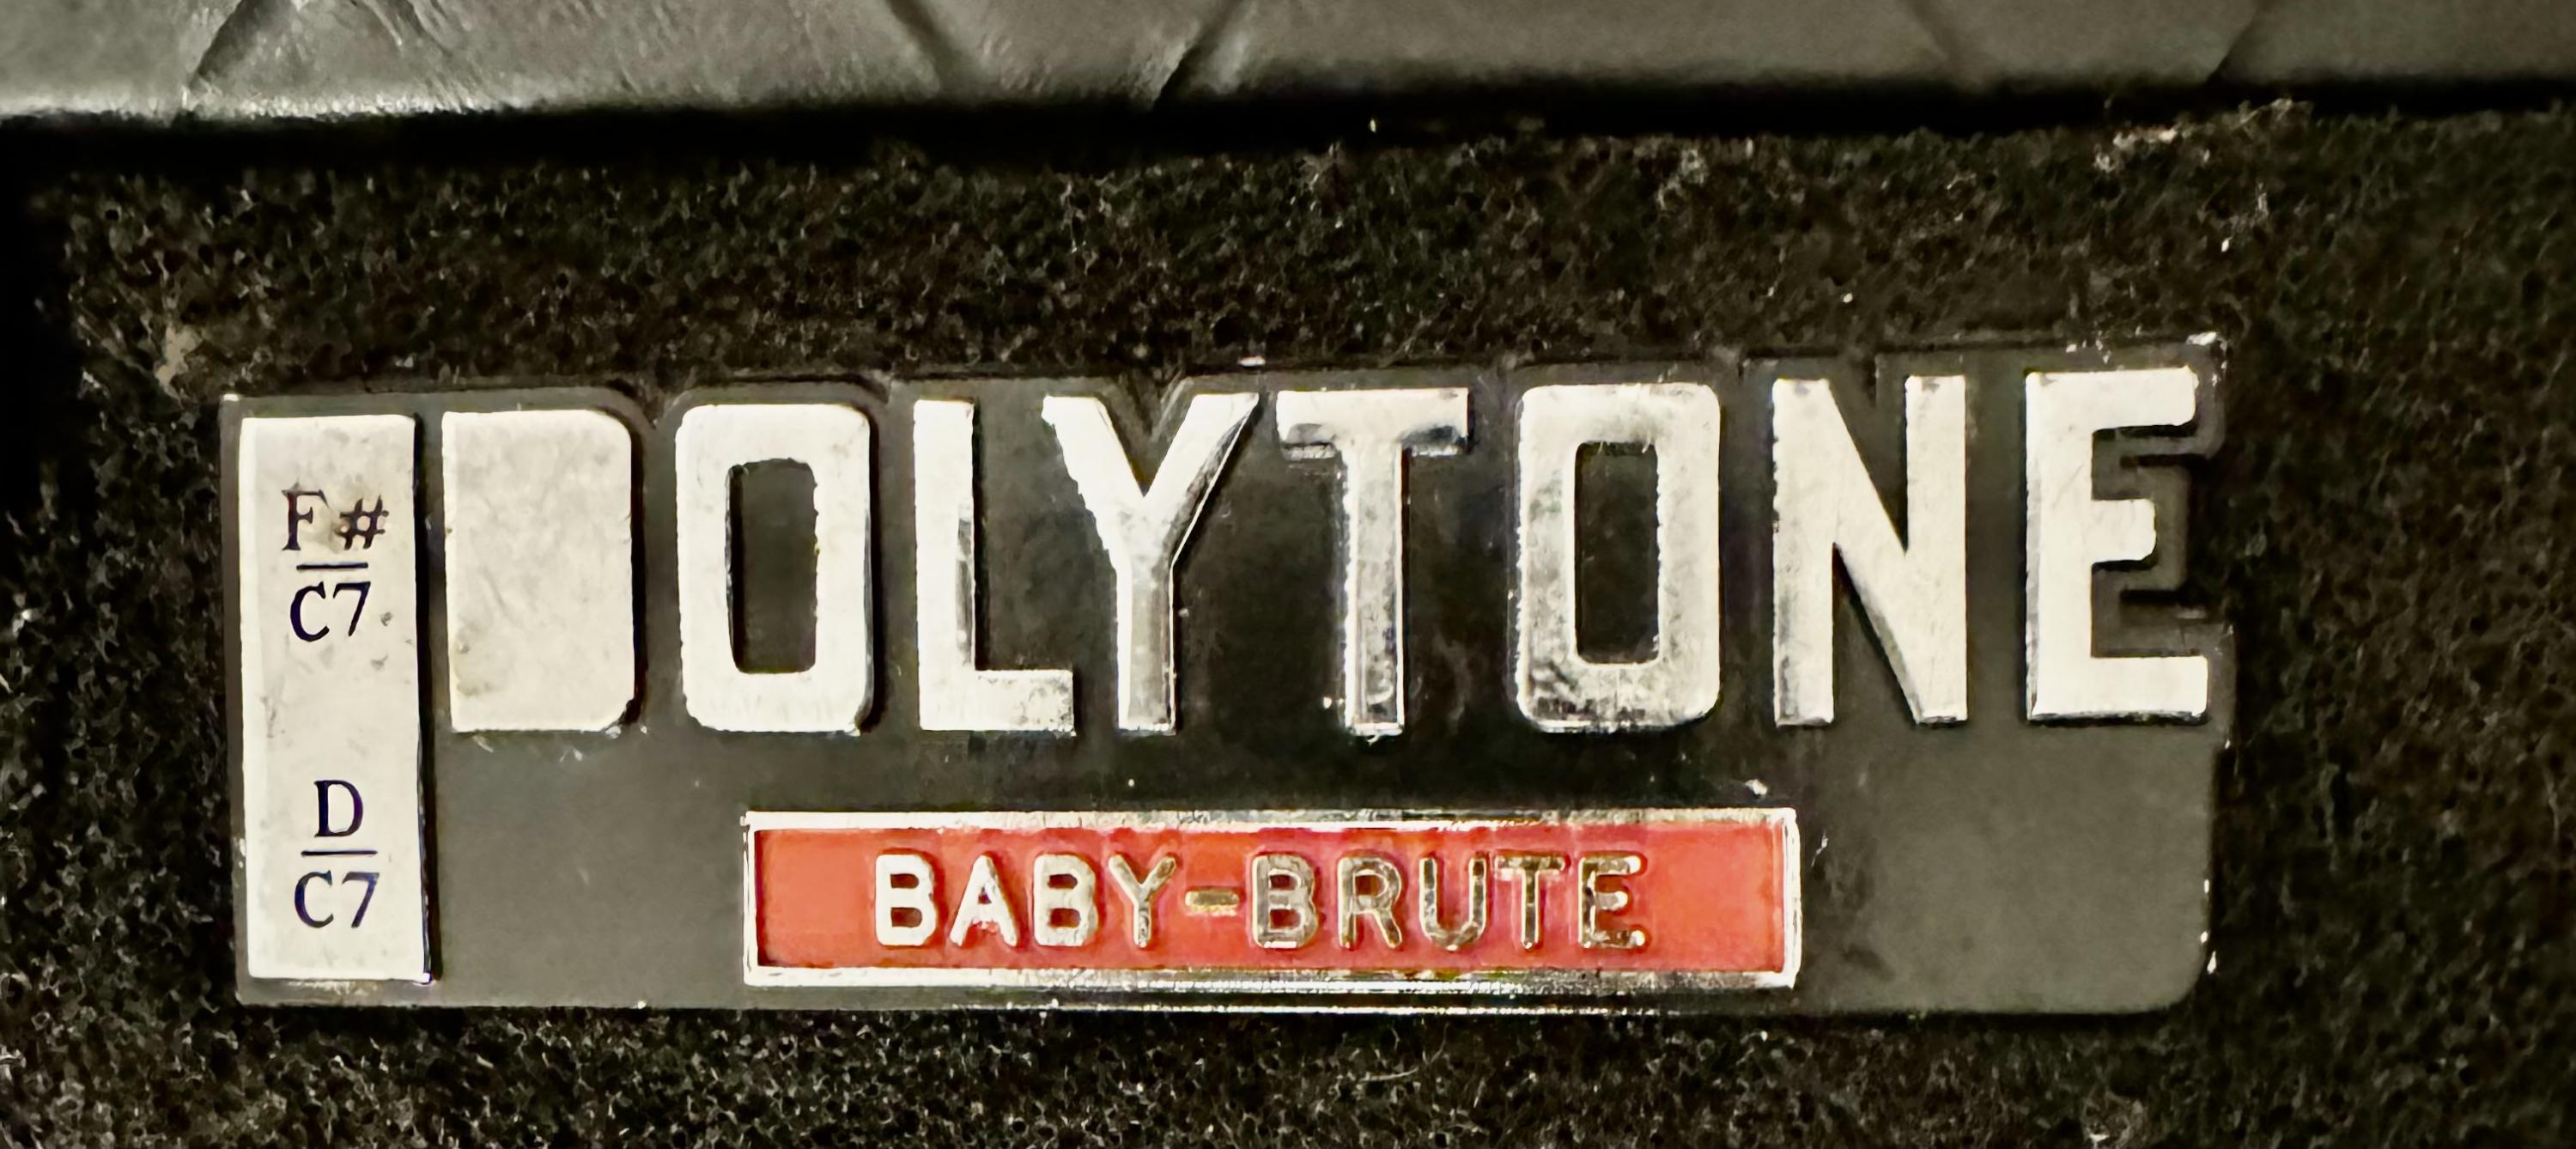 Very rare POLYTONE Baby Brute amp (1980s)-img_5373-jpg